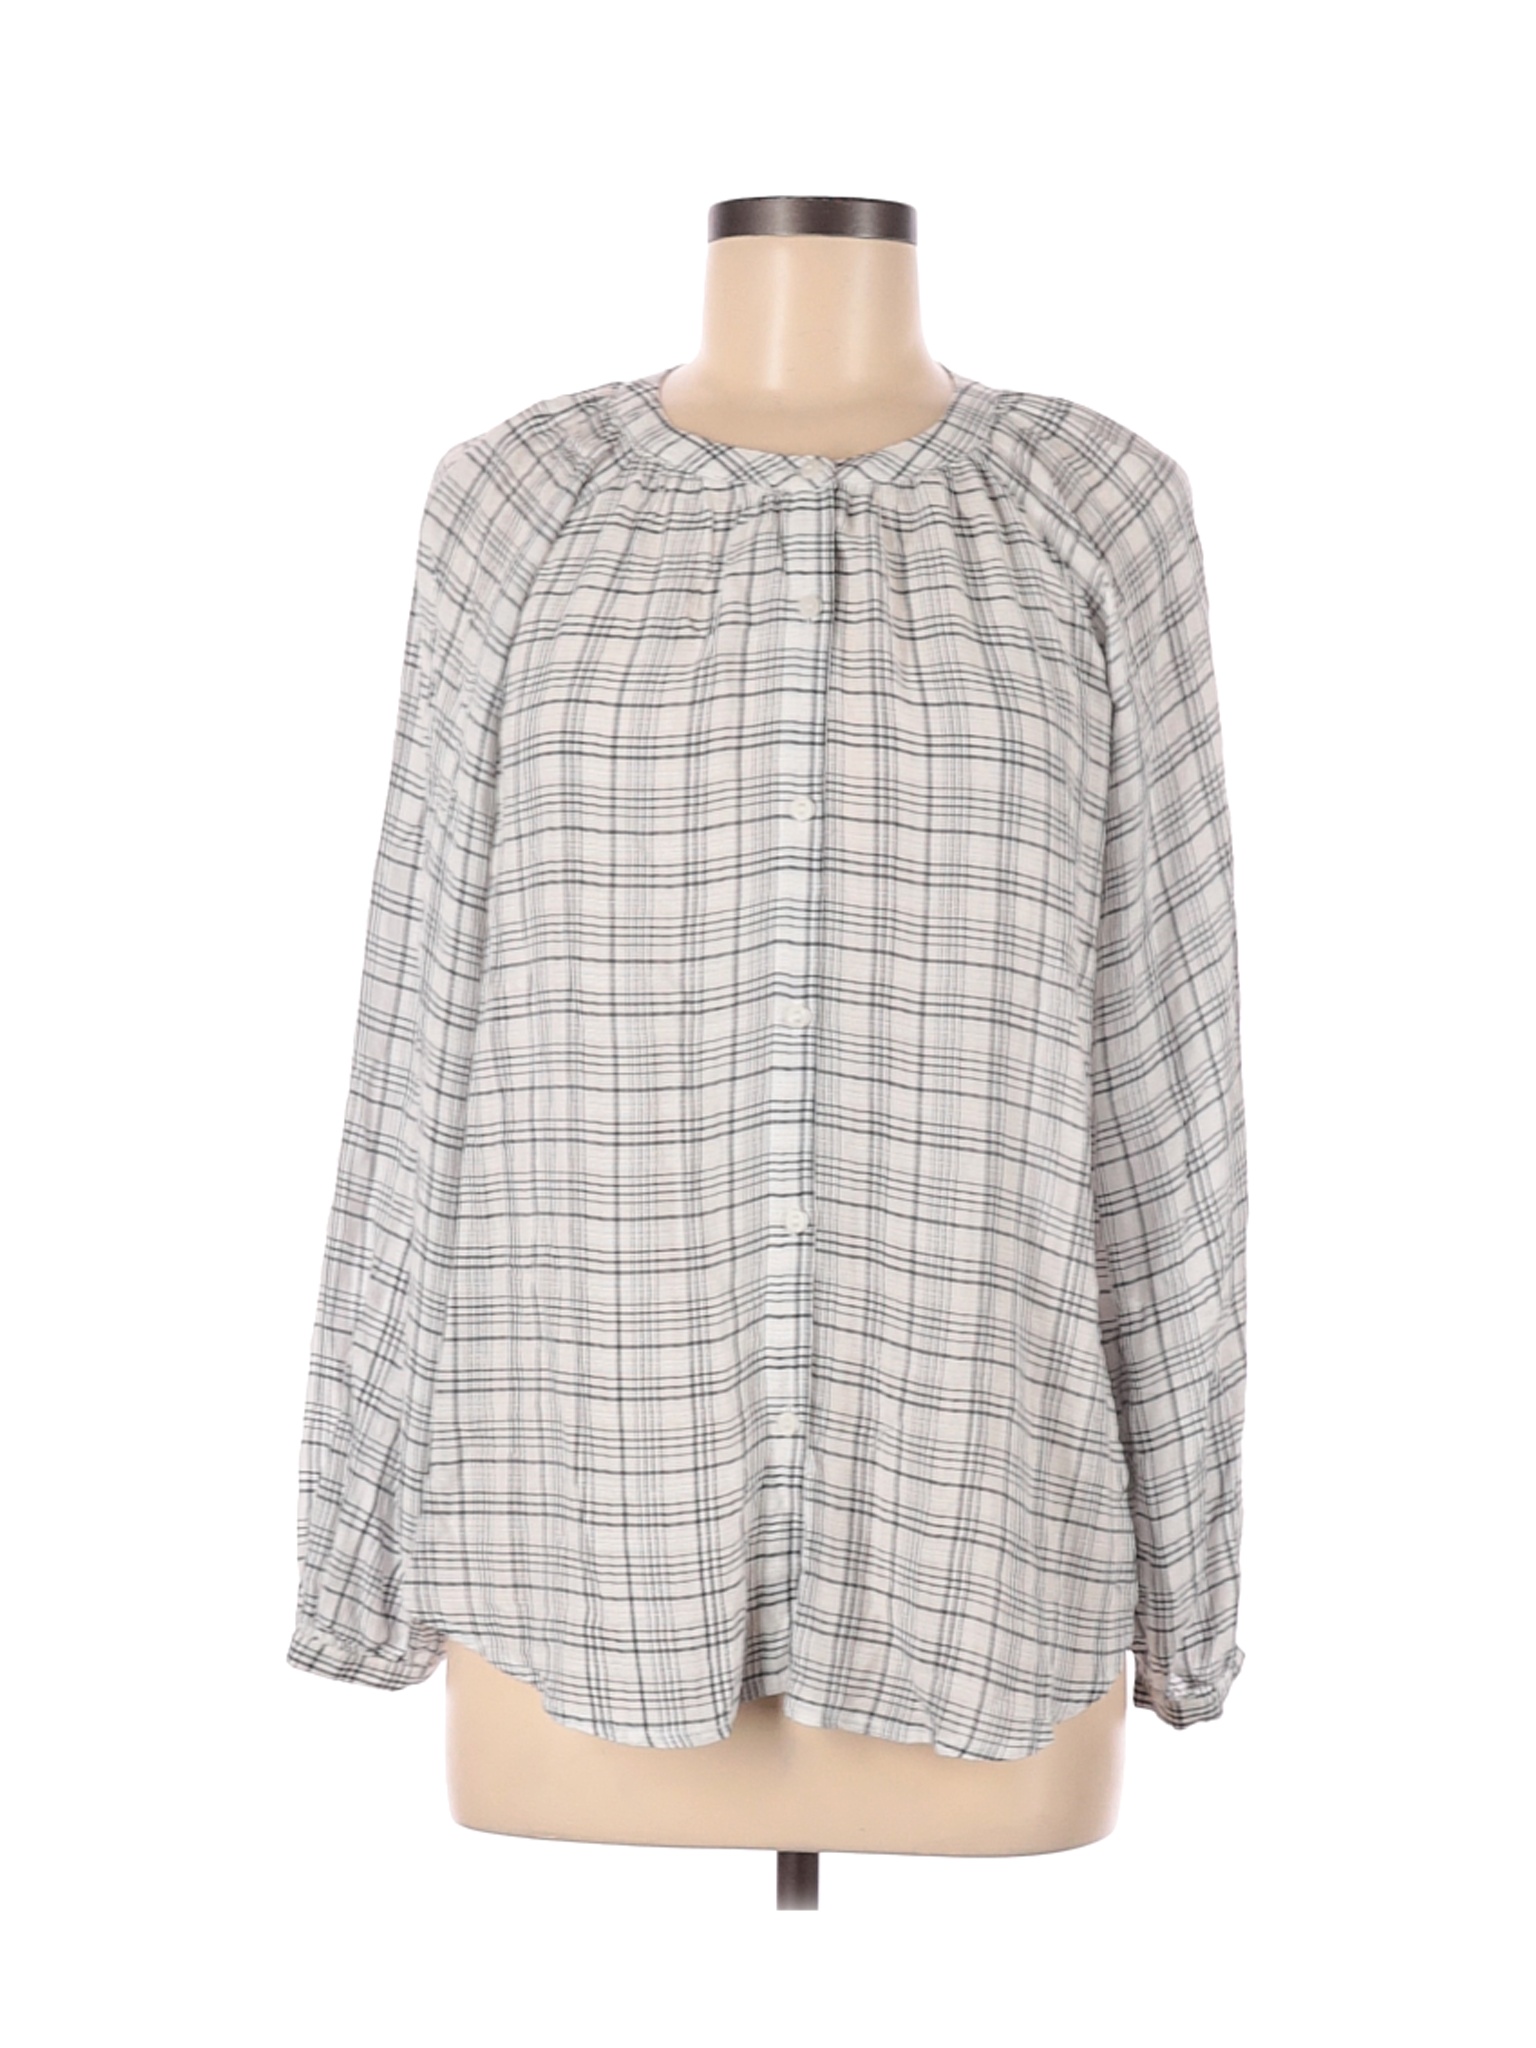 Universal Thread Women Gray Long Sleeve Blouse M | eBay